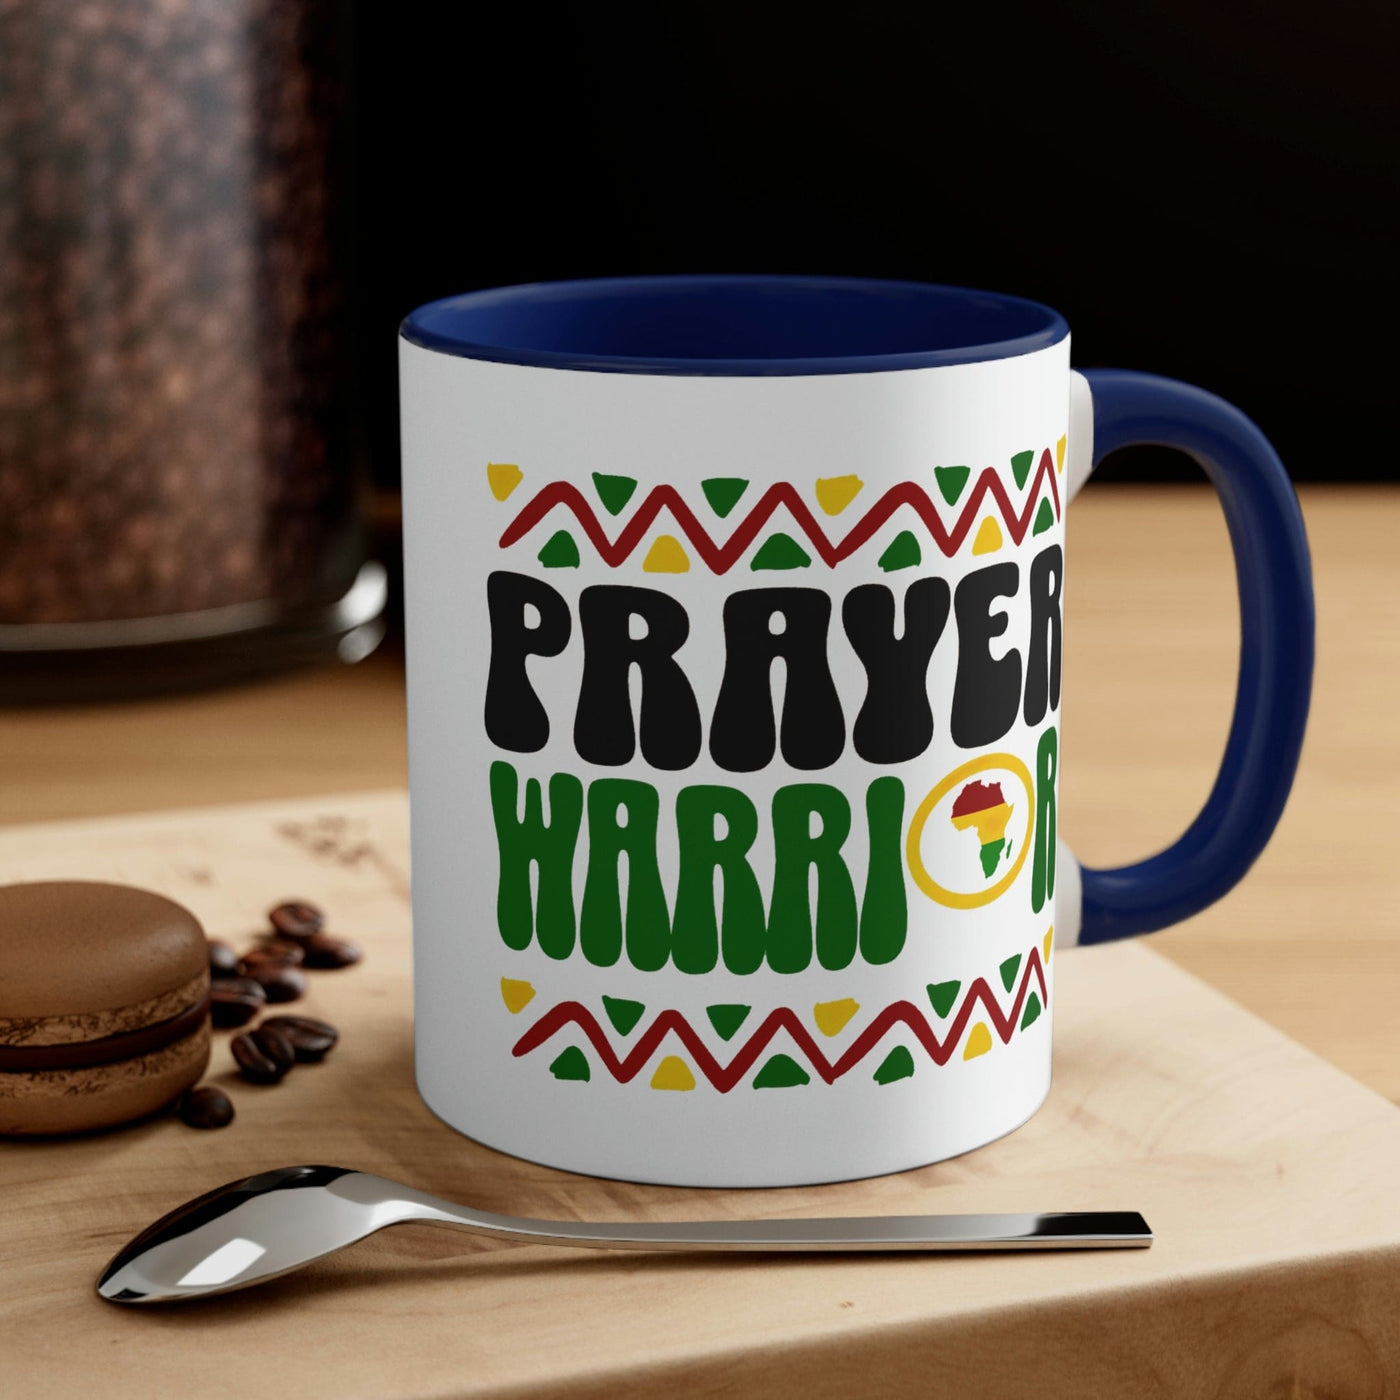 Two-tone Accent Ceramic Mug 11oz Prayer Warrior Christian Inspiration Africa